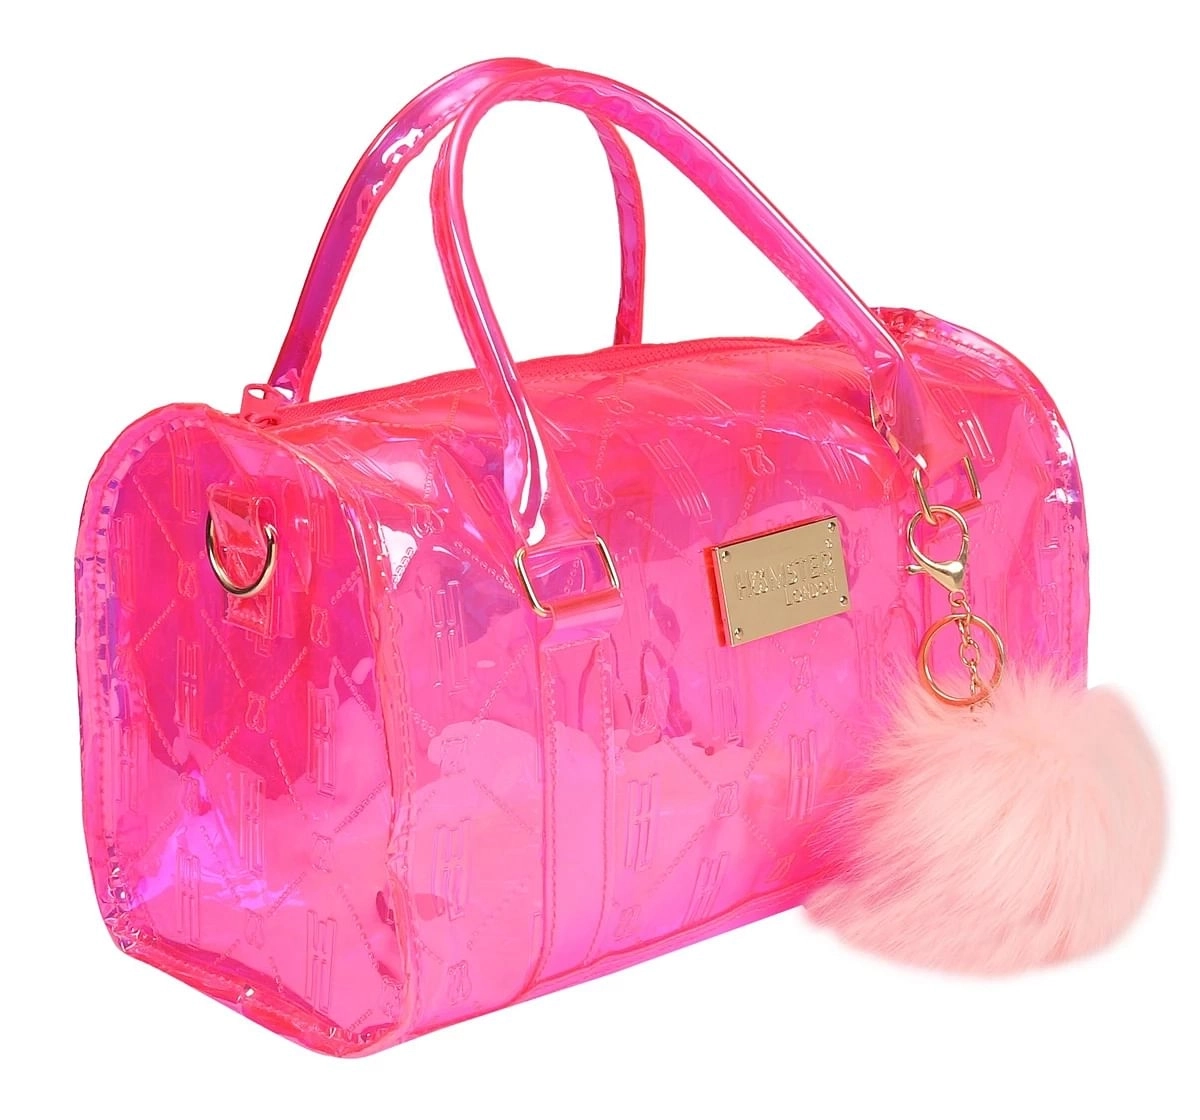 Hamster London Raver Duffle Bag, Pink, Medium, 8Y+